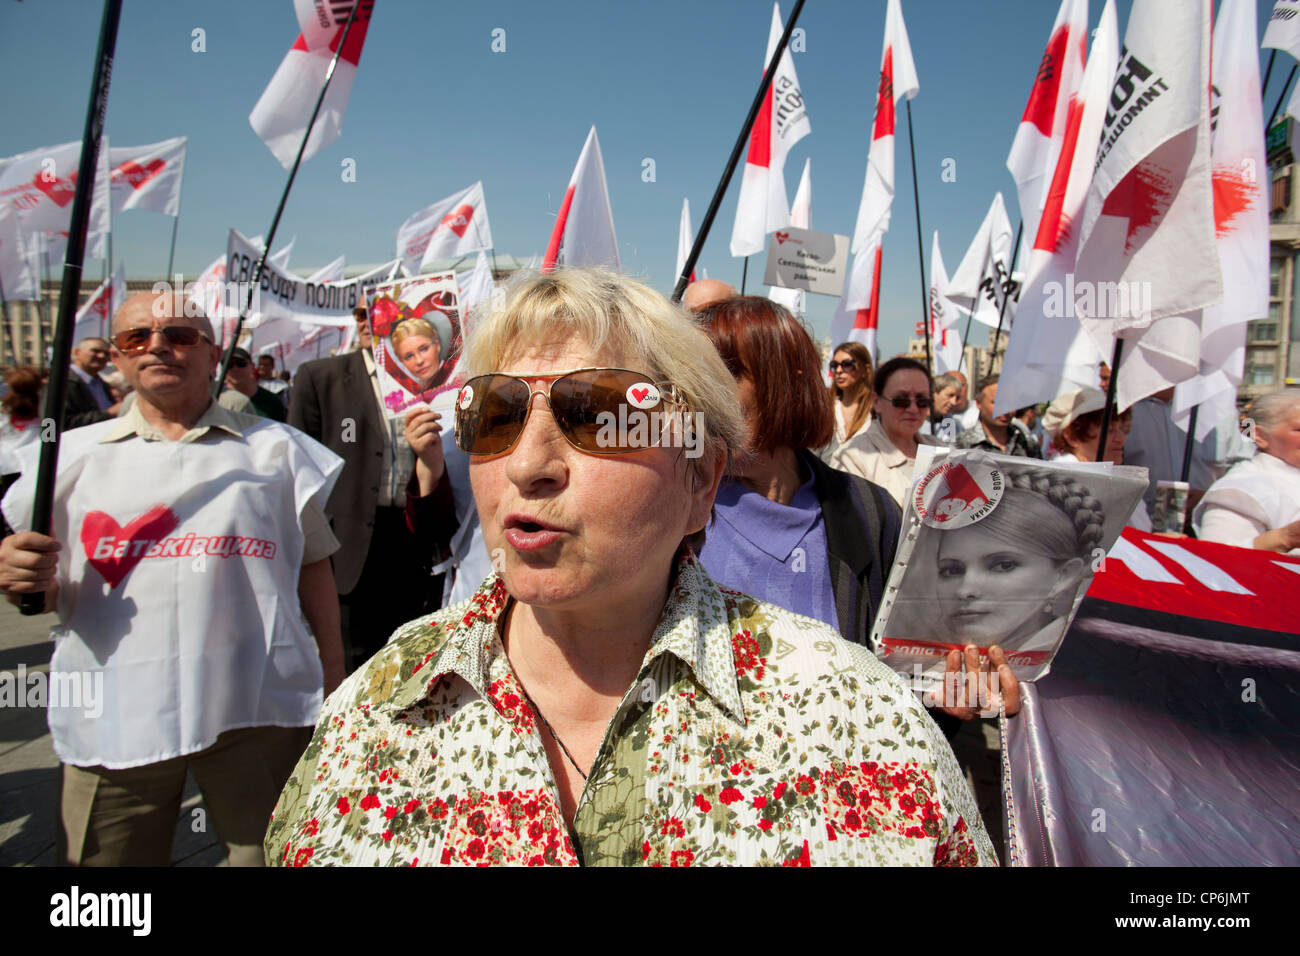 A protest rally for Yulia Tymoshenko in Kiev, Ukraine. Stock Photo